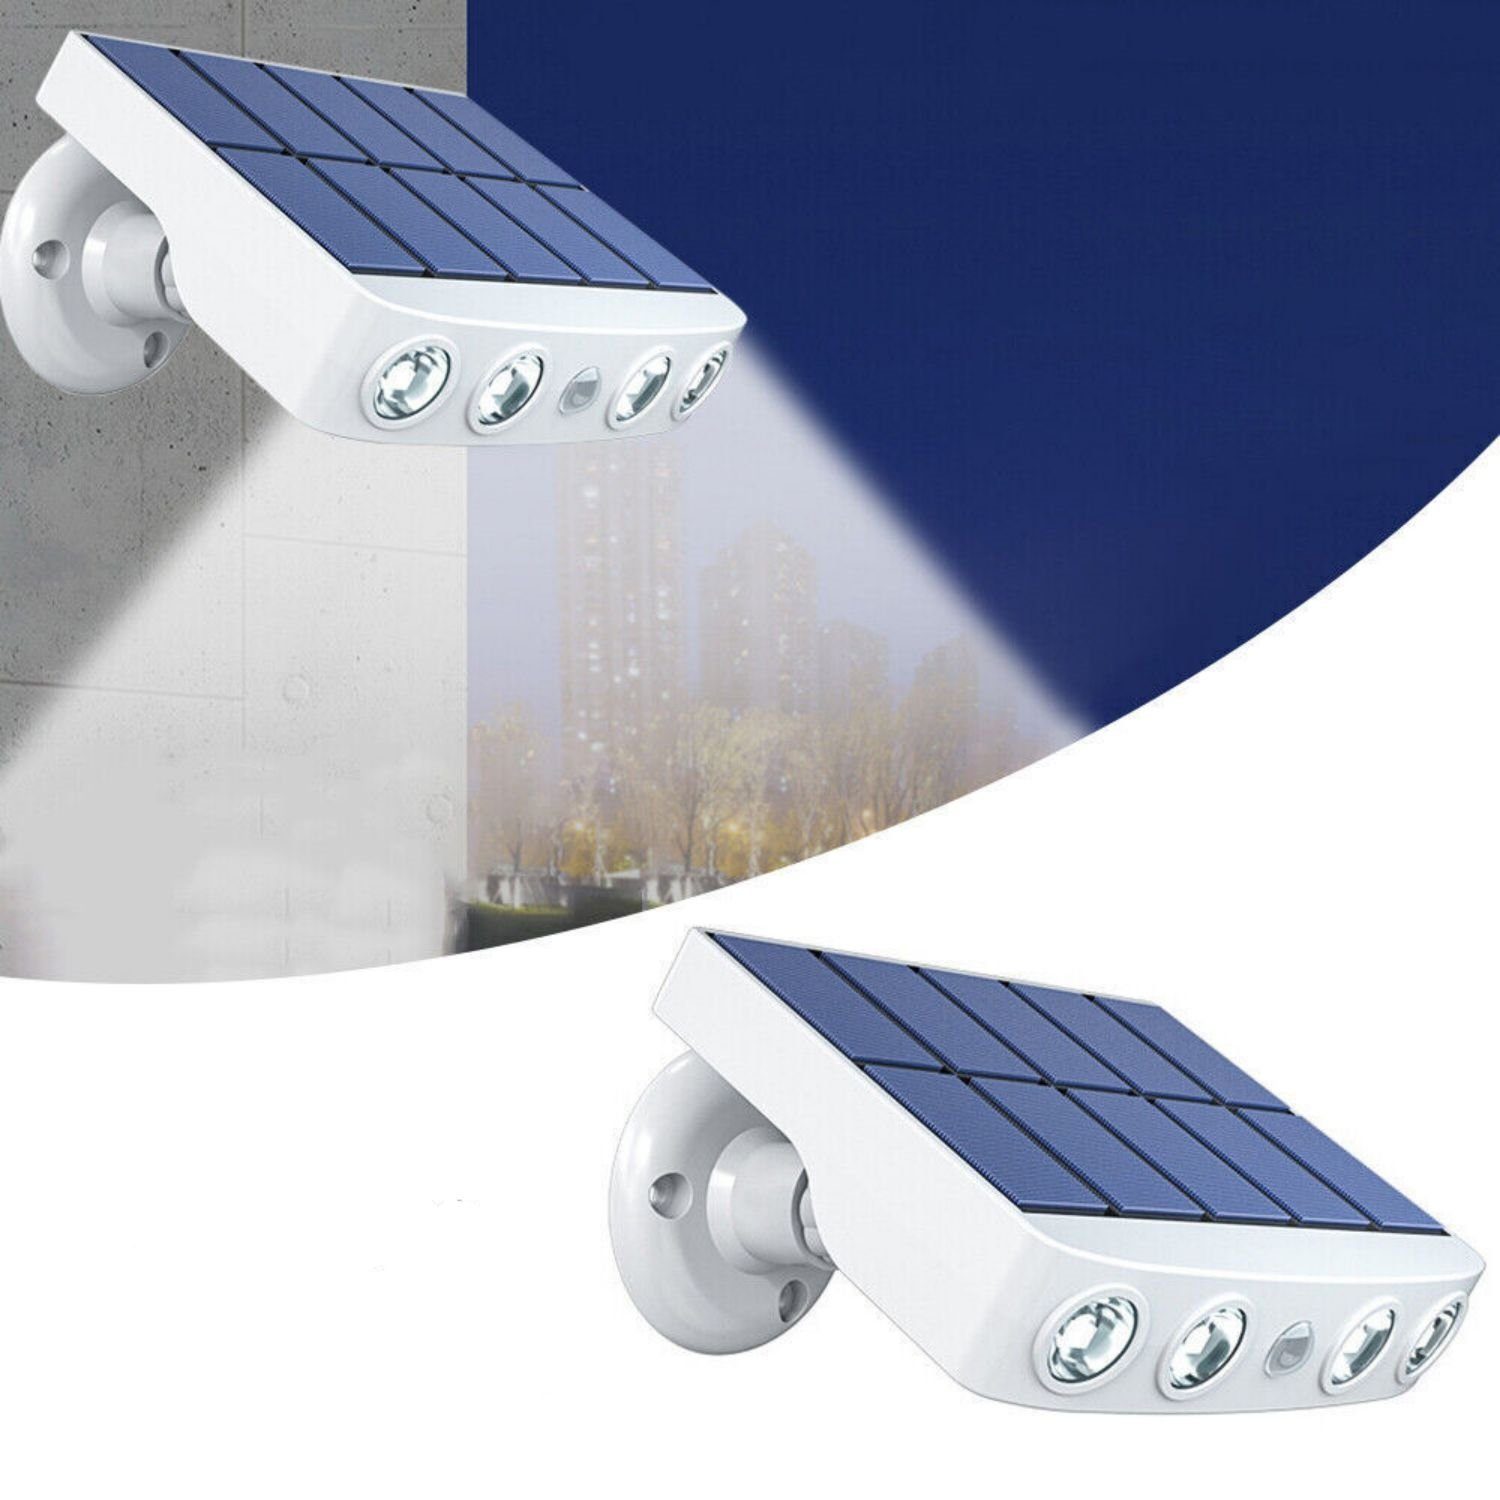 DOPWii LED Solarleuchte 2PCS Solarlampe,3 Modi,mit